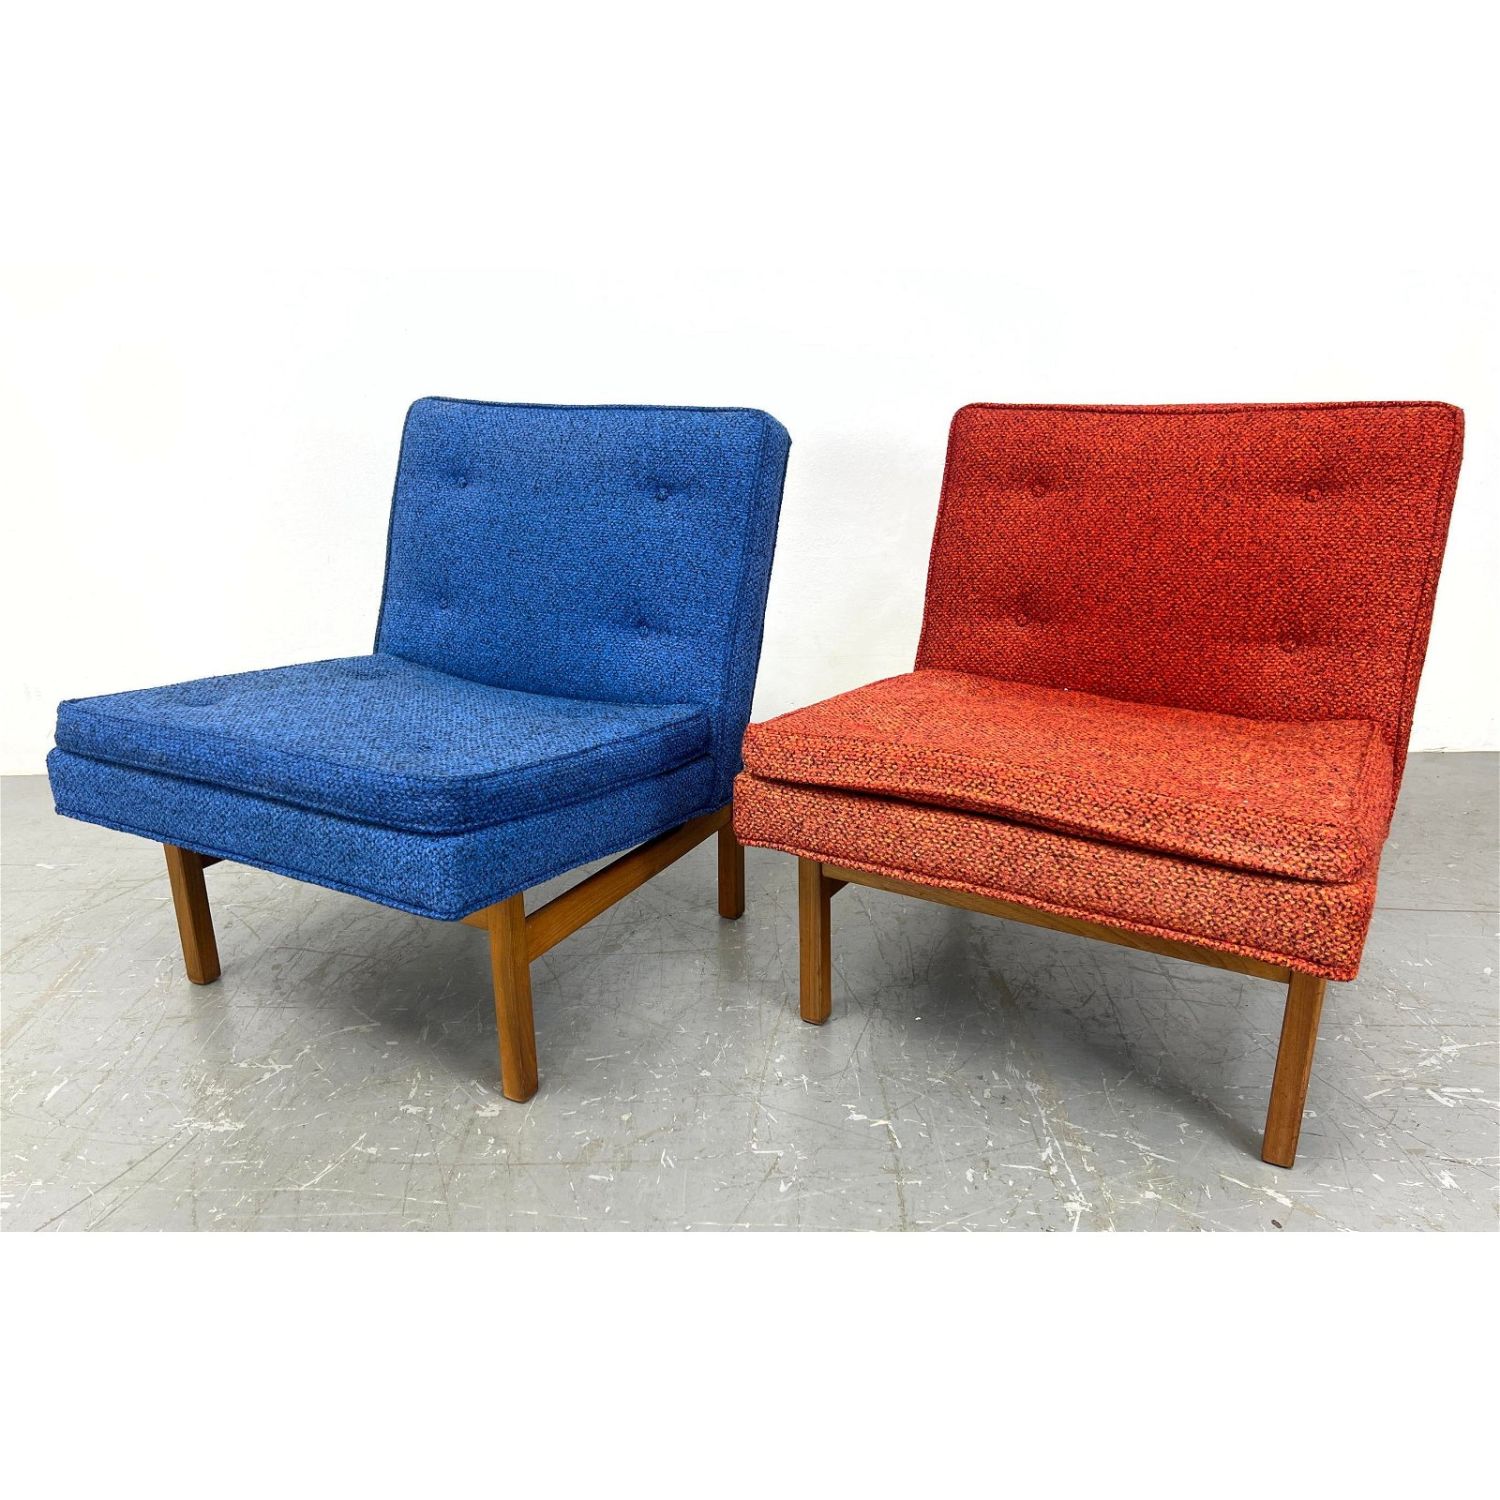 Pair Milo Baughman Lounge Chairs.